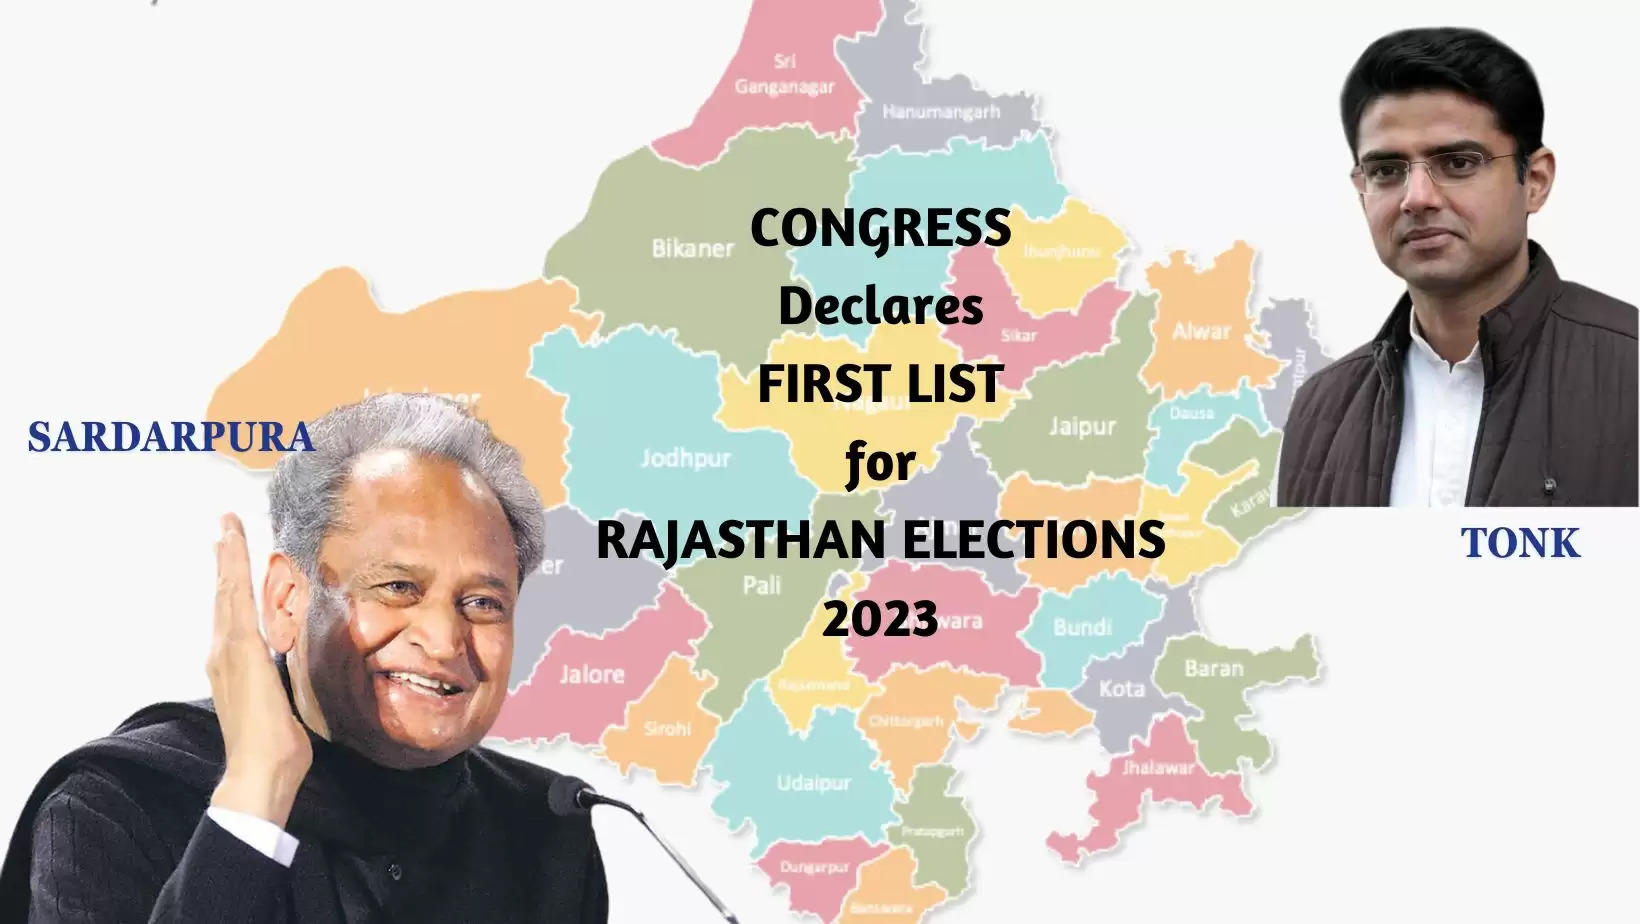 Check the First List of Congress Candidates Here. Ashok Gehlot Sardarpura, Sachin Pilot Tonk, Rajasthan Assembly Elections 2023